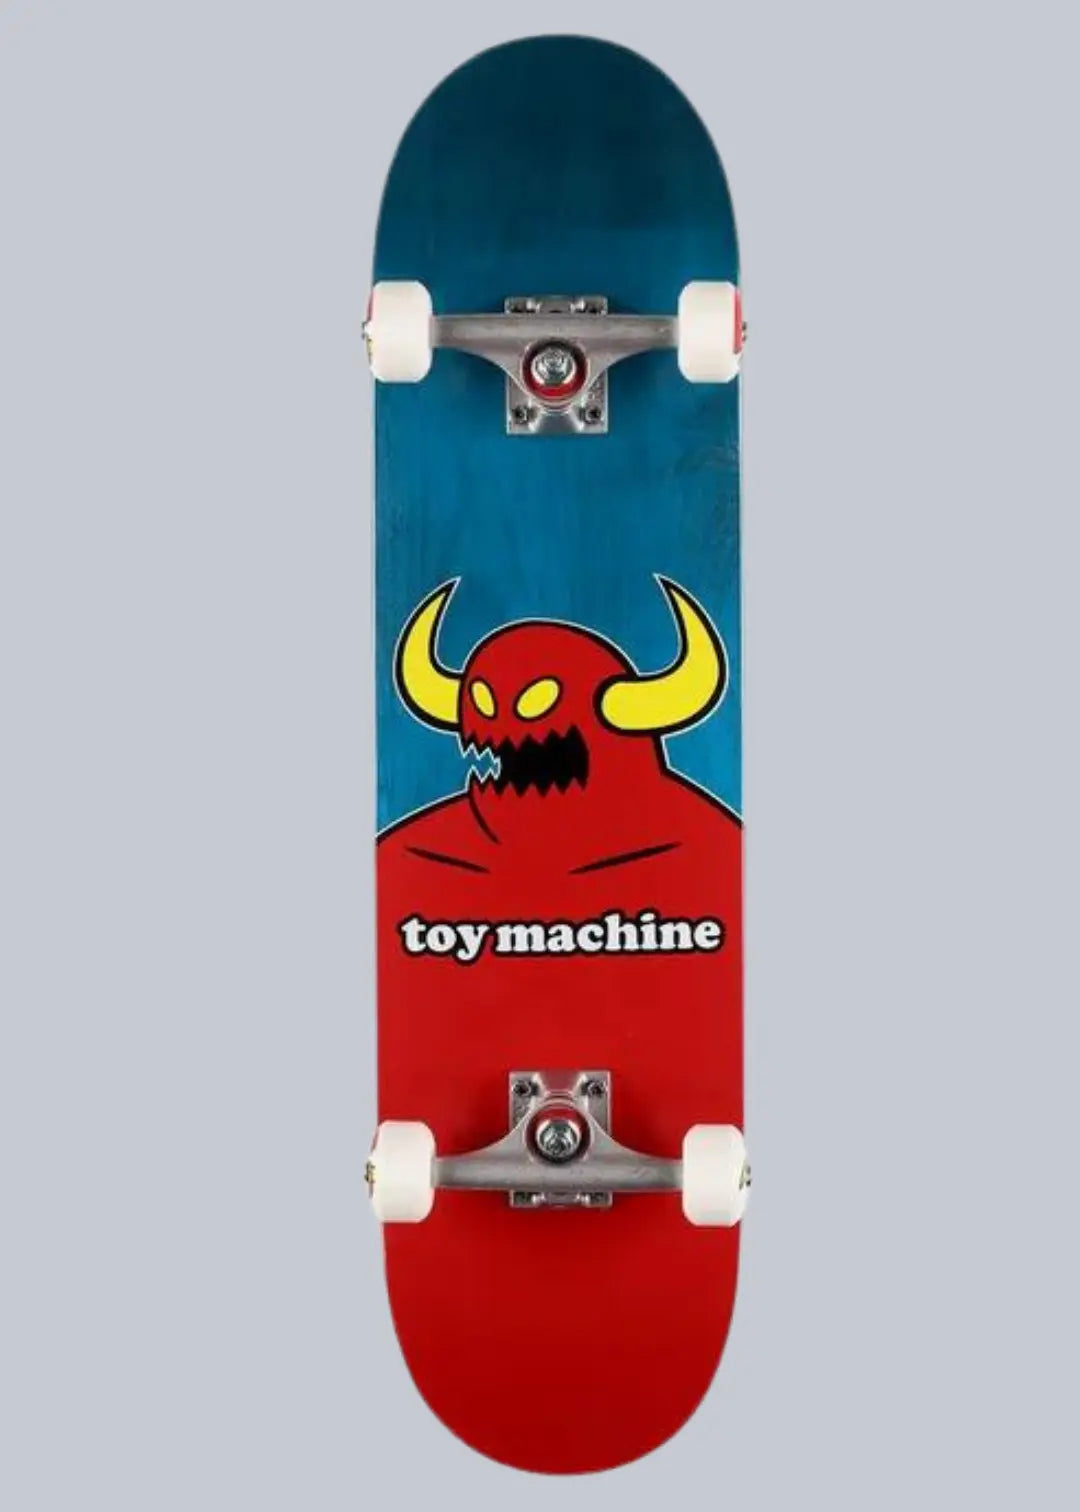 Toy Machine Monster 8.0